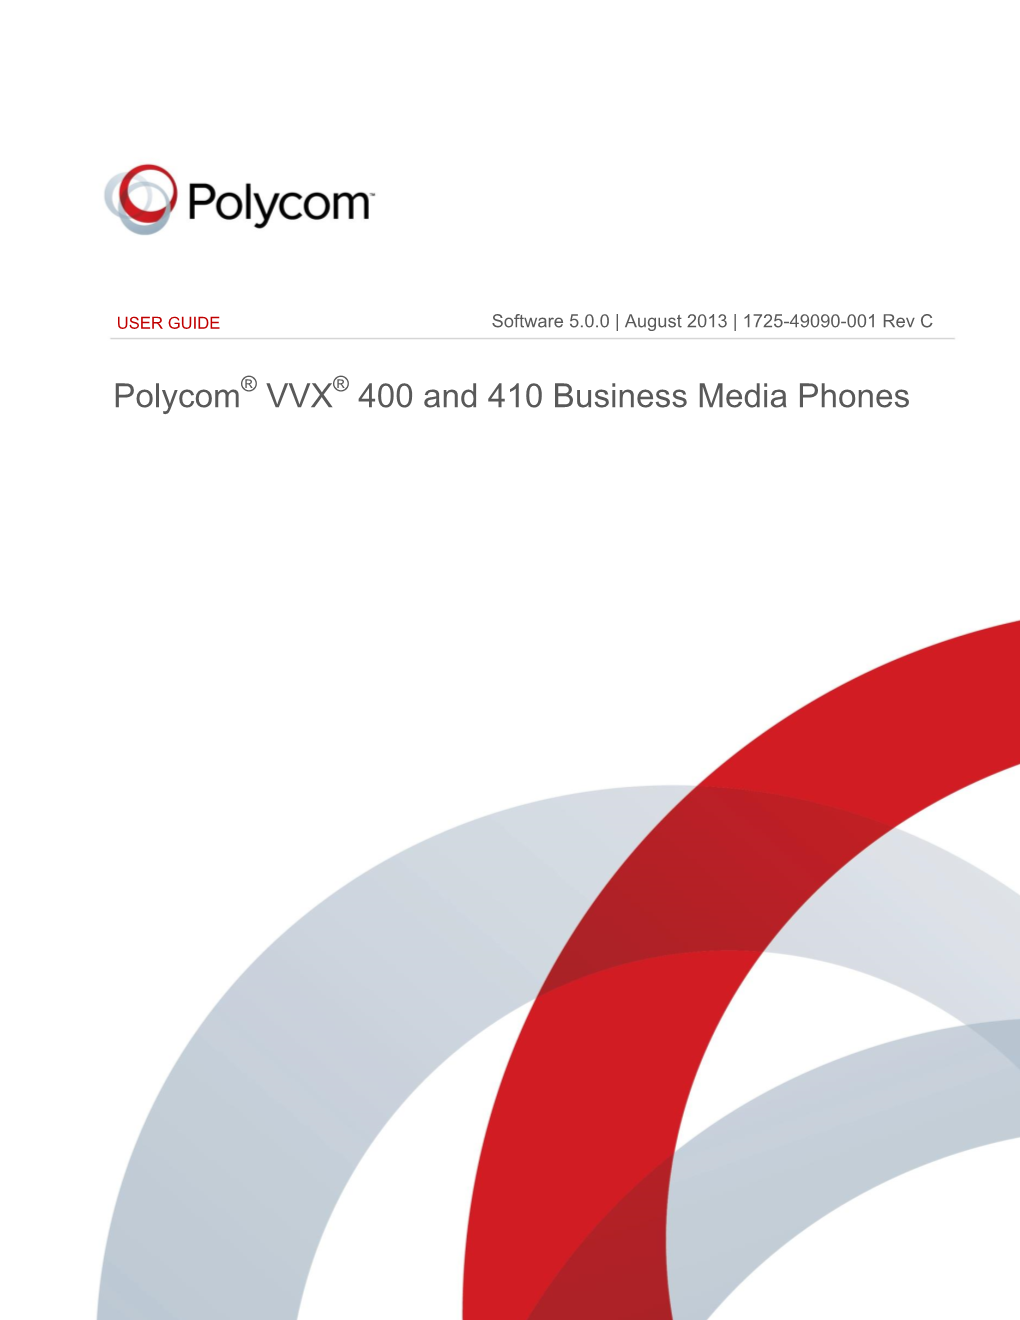 Polycom VVX 400 and 410 Business Media Phones User Guide Version 5.0.0